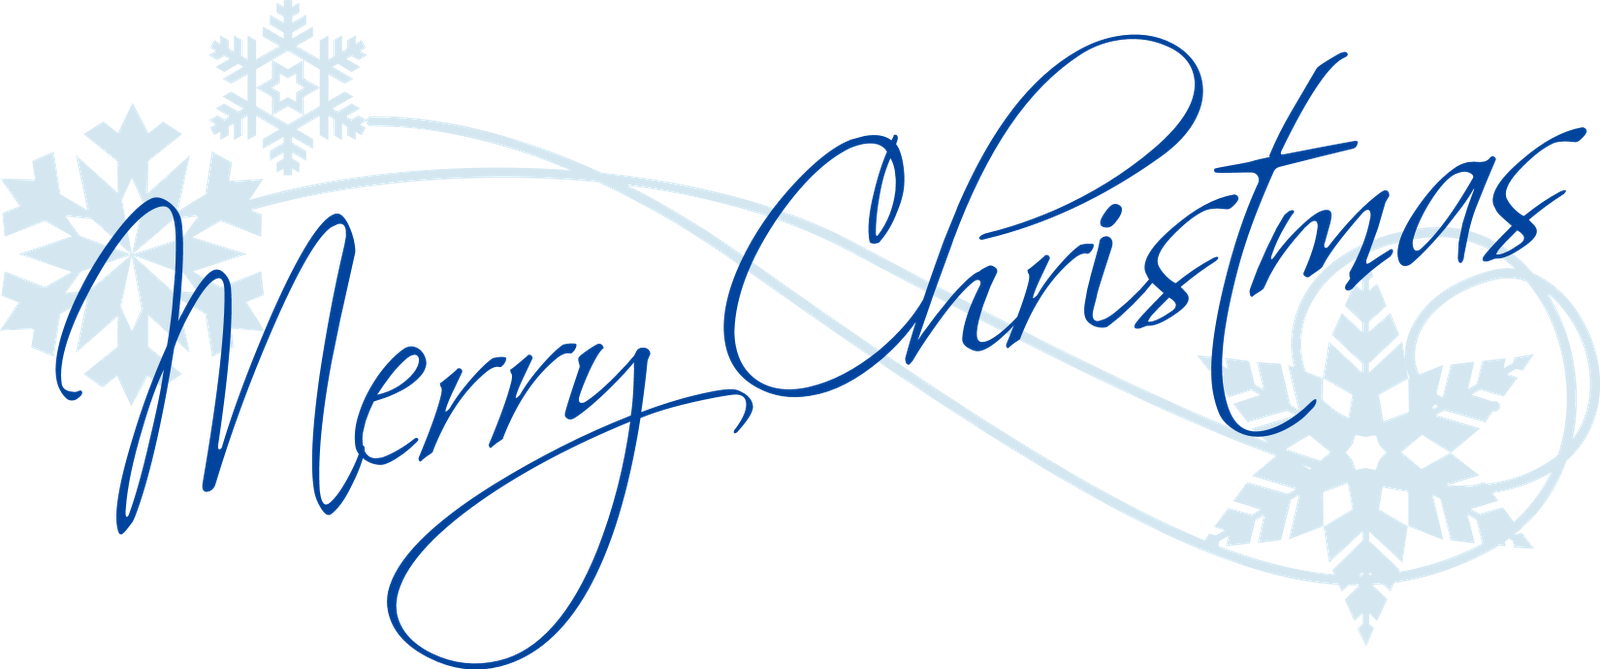 Merry Christmas Word Art Transparent